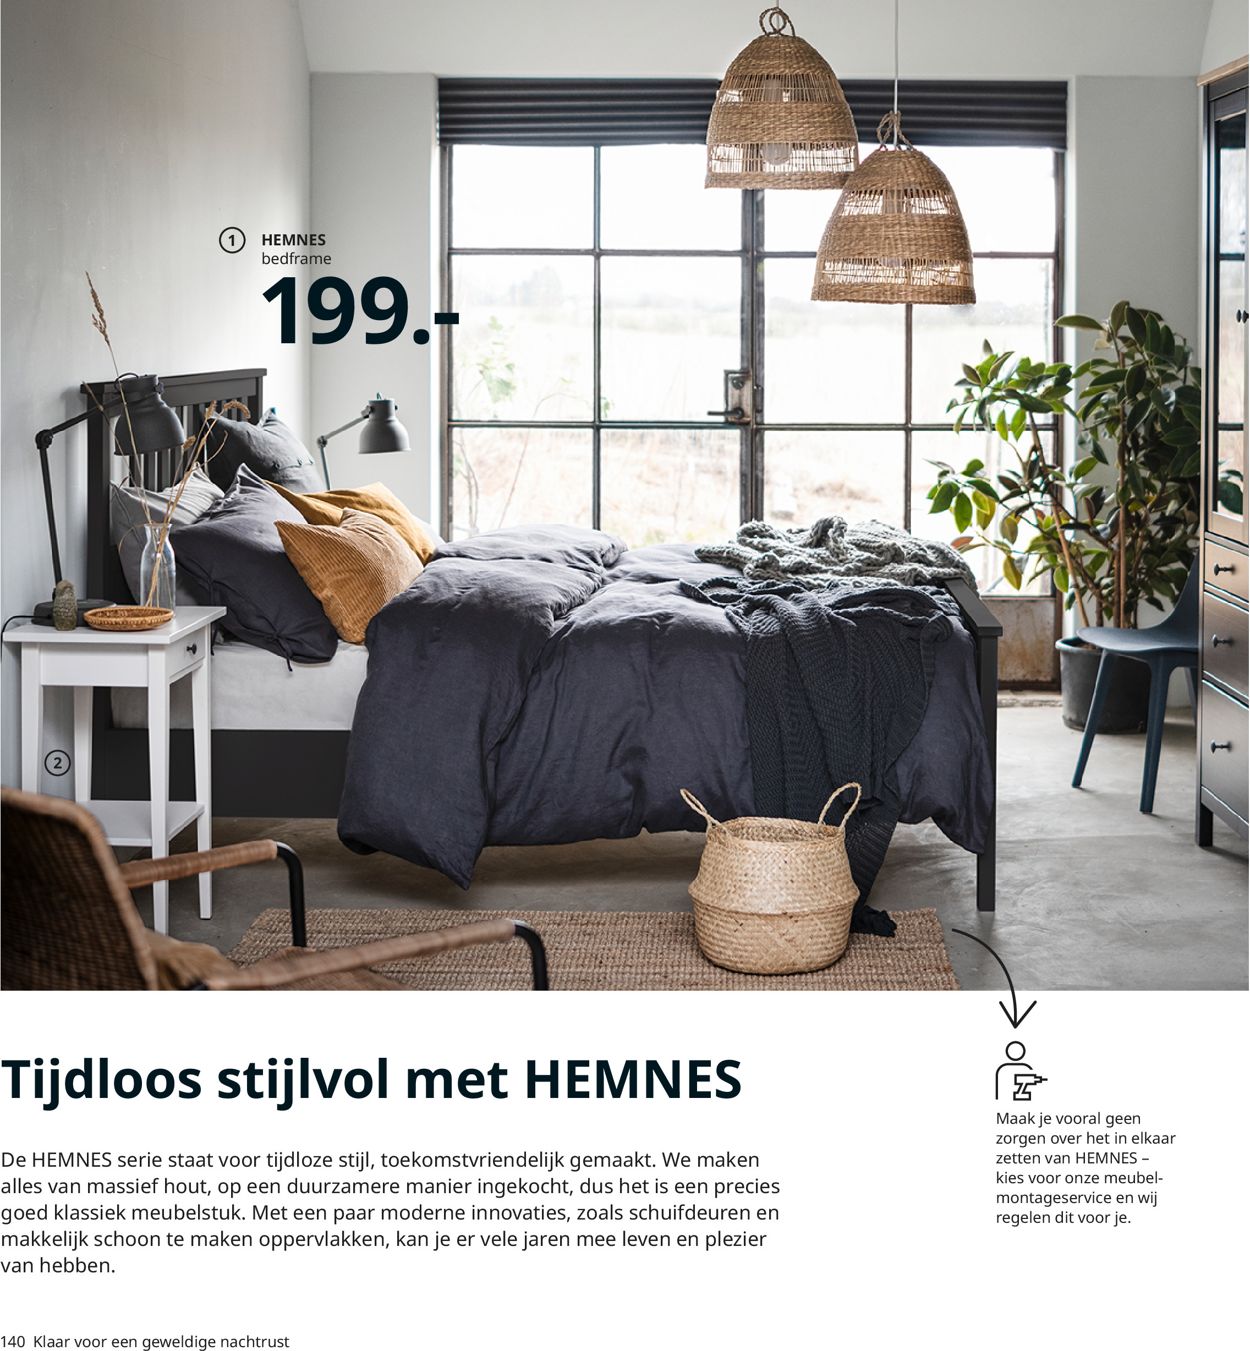 IKEA Flyer vanaf 10.06.2021